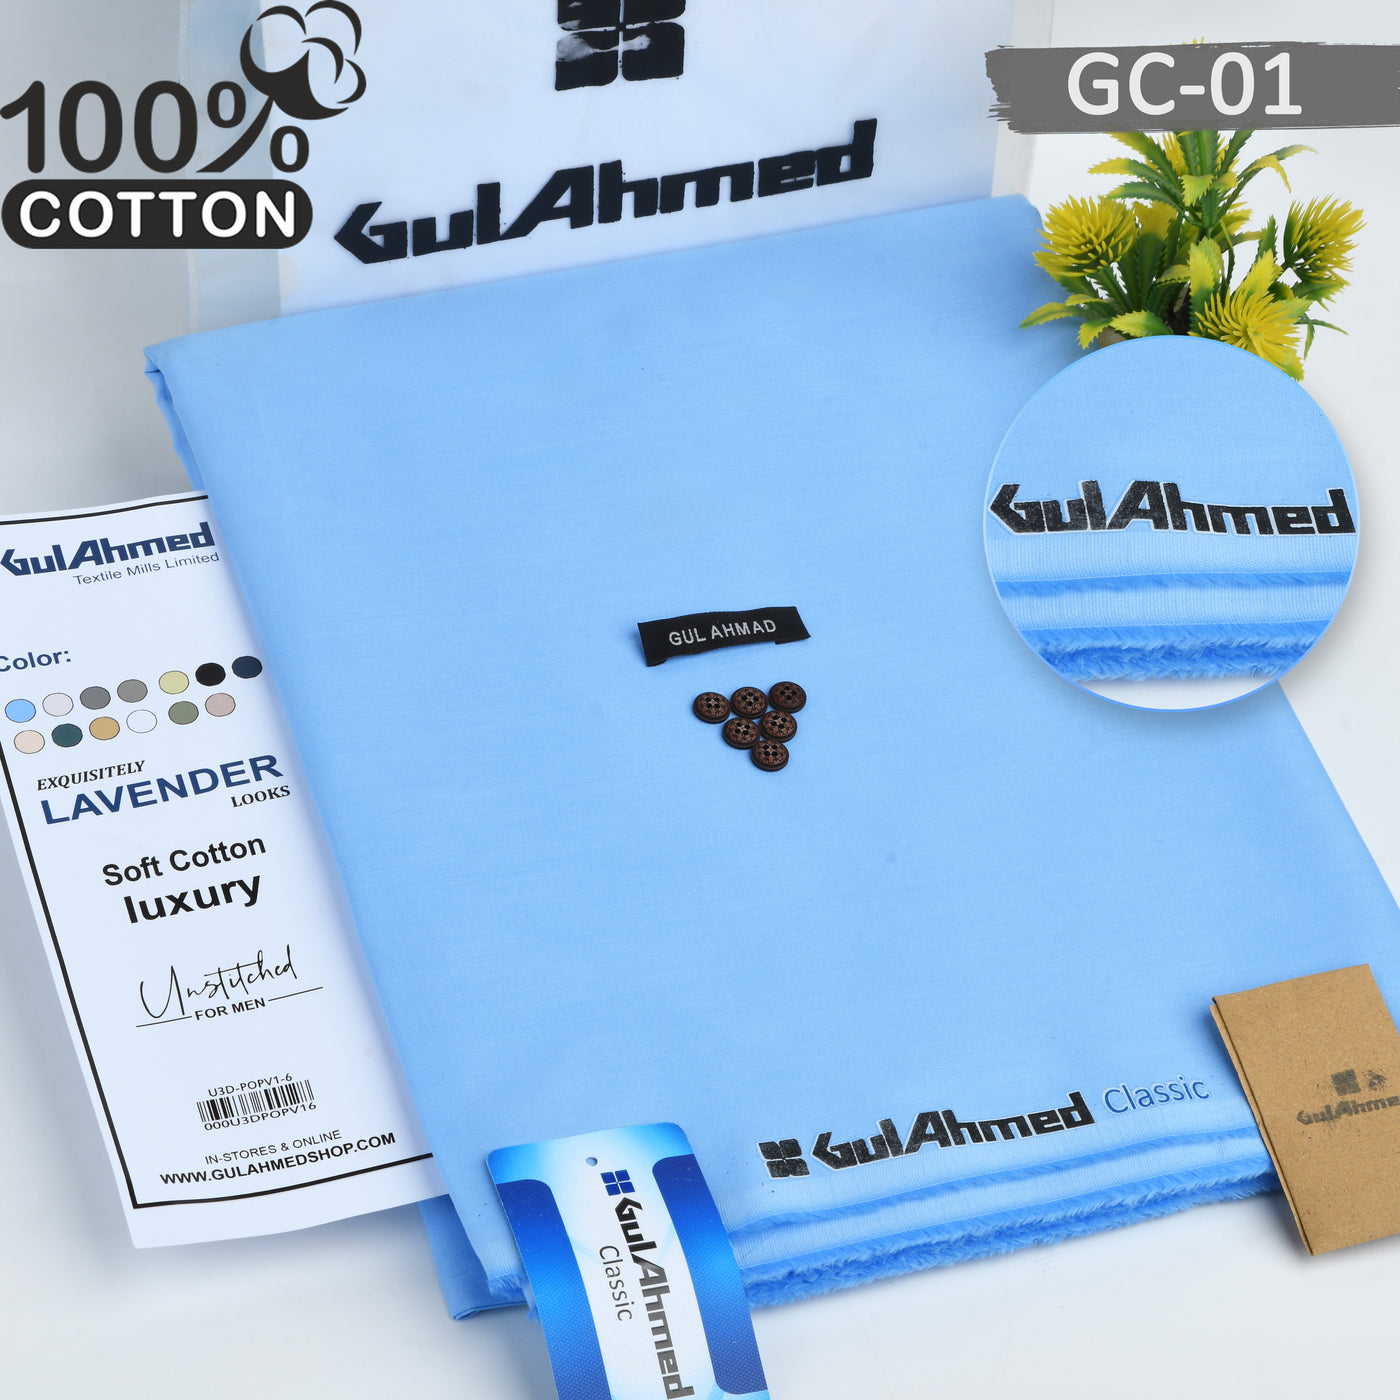 Gul Ahmed Cotton GC-01